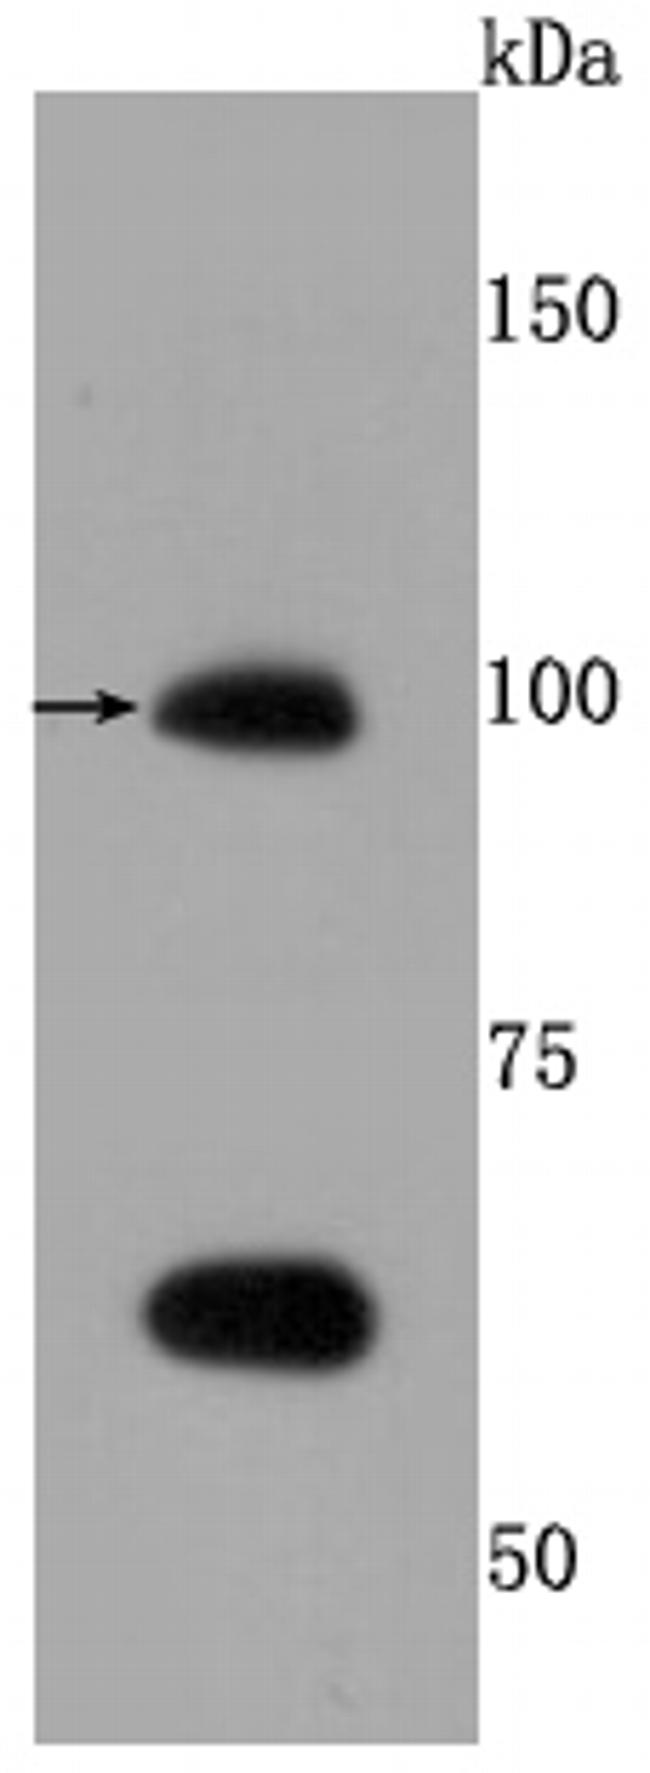 TLR5 Antibody in Western Blot (WB)